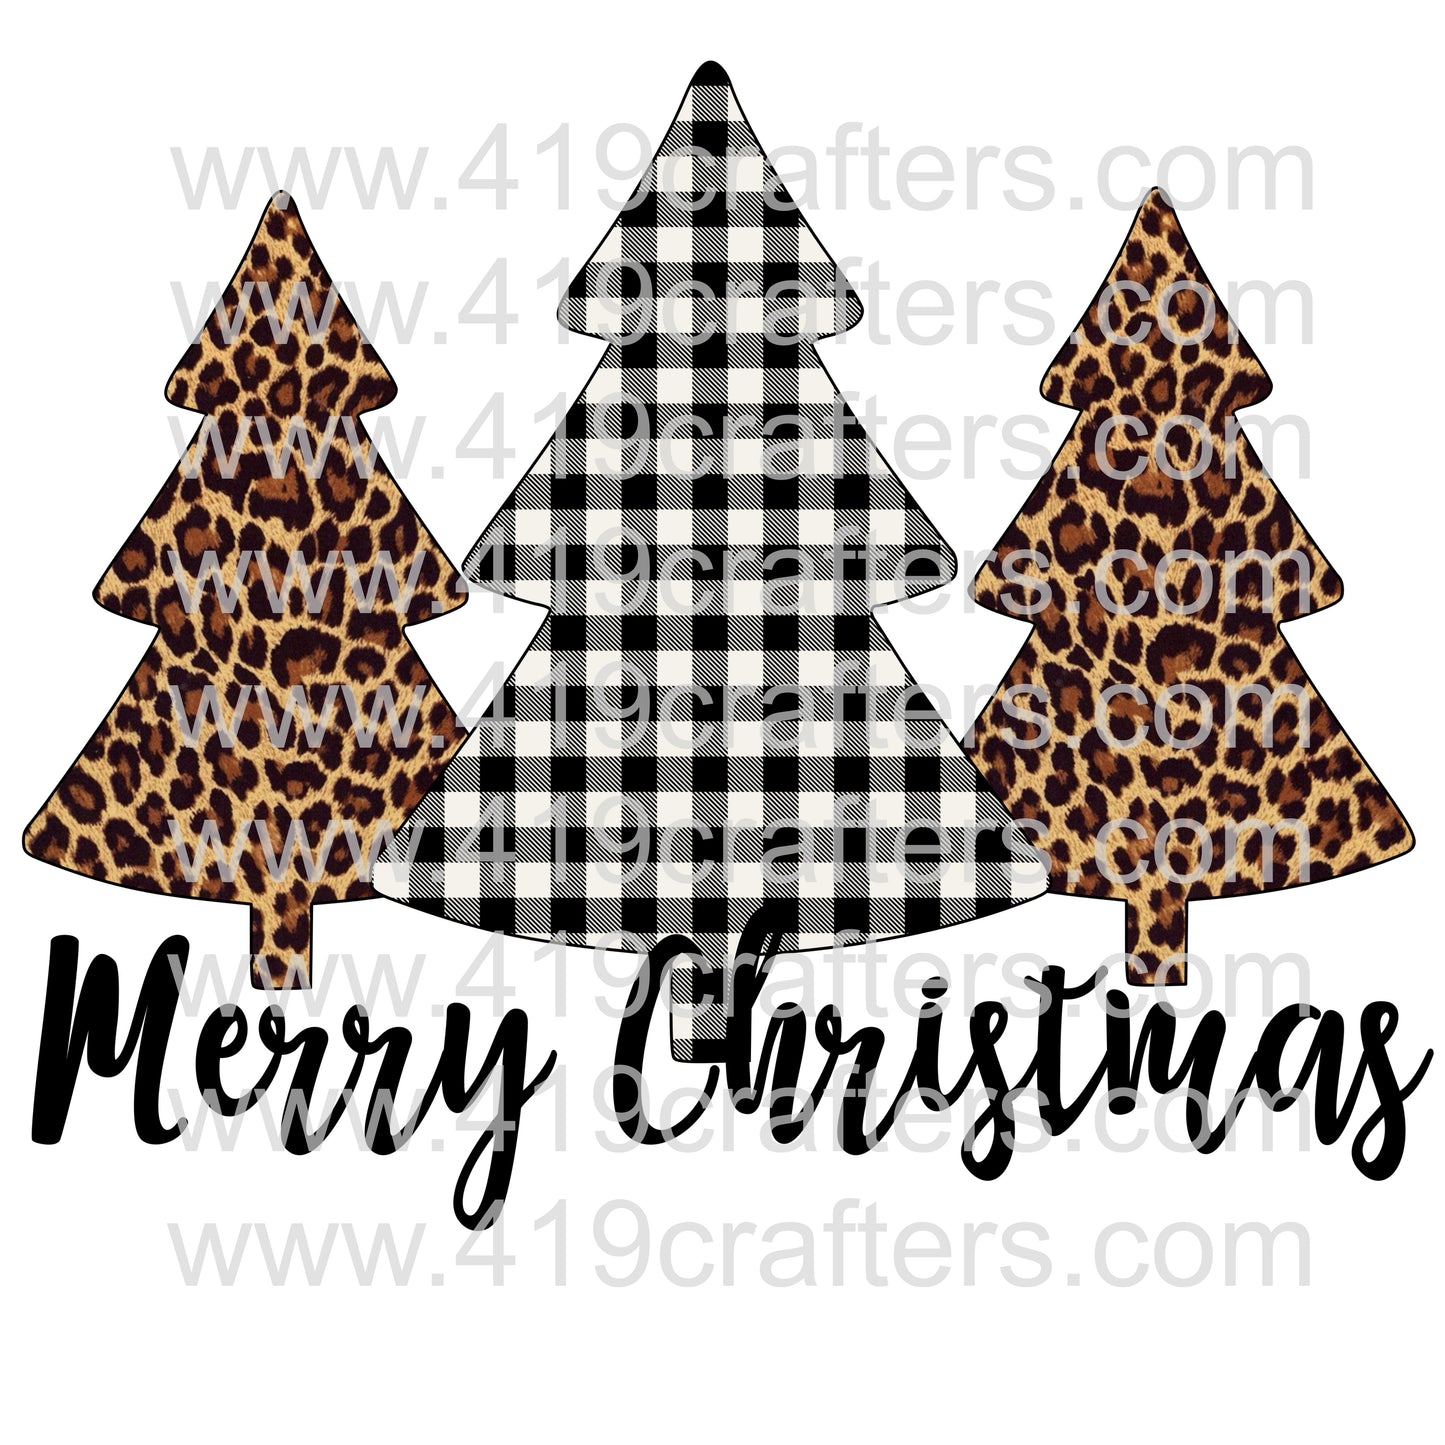 White Toner Laser Print - Buffalo Plaid and Leopard Christmas Trees